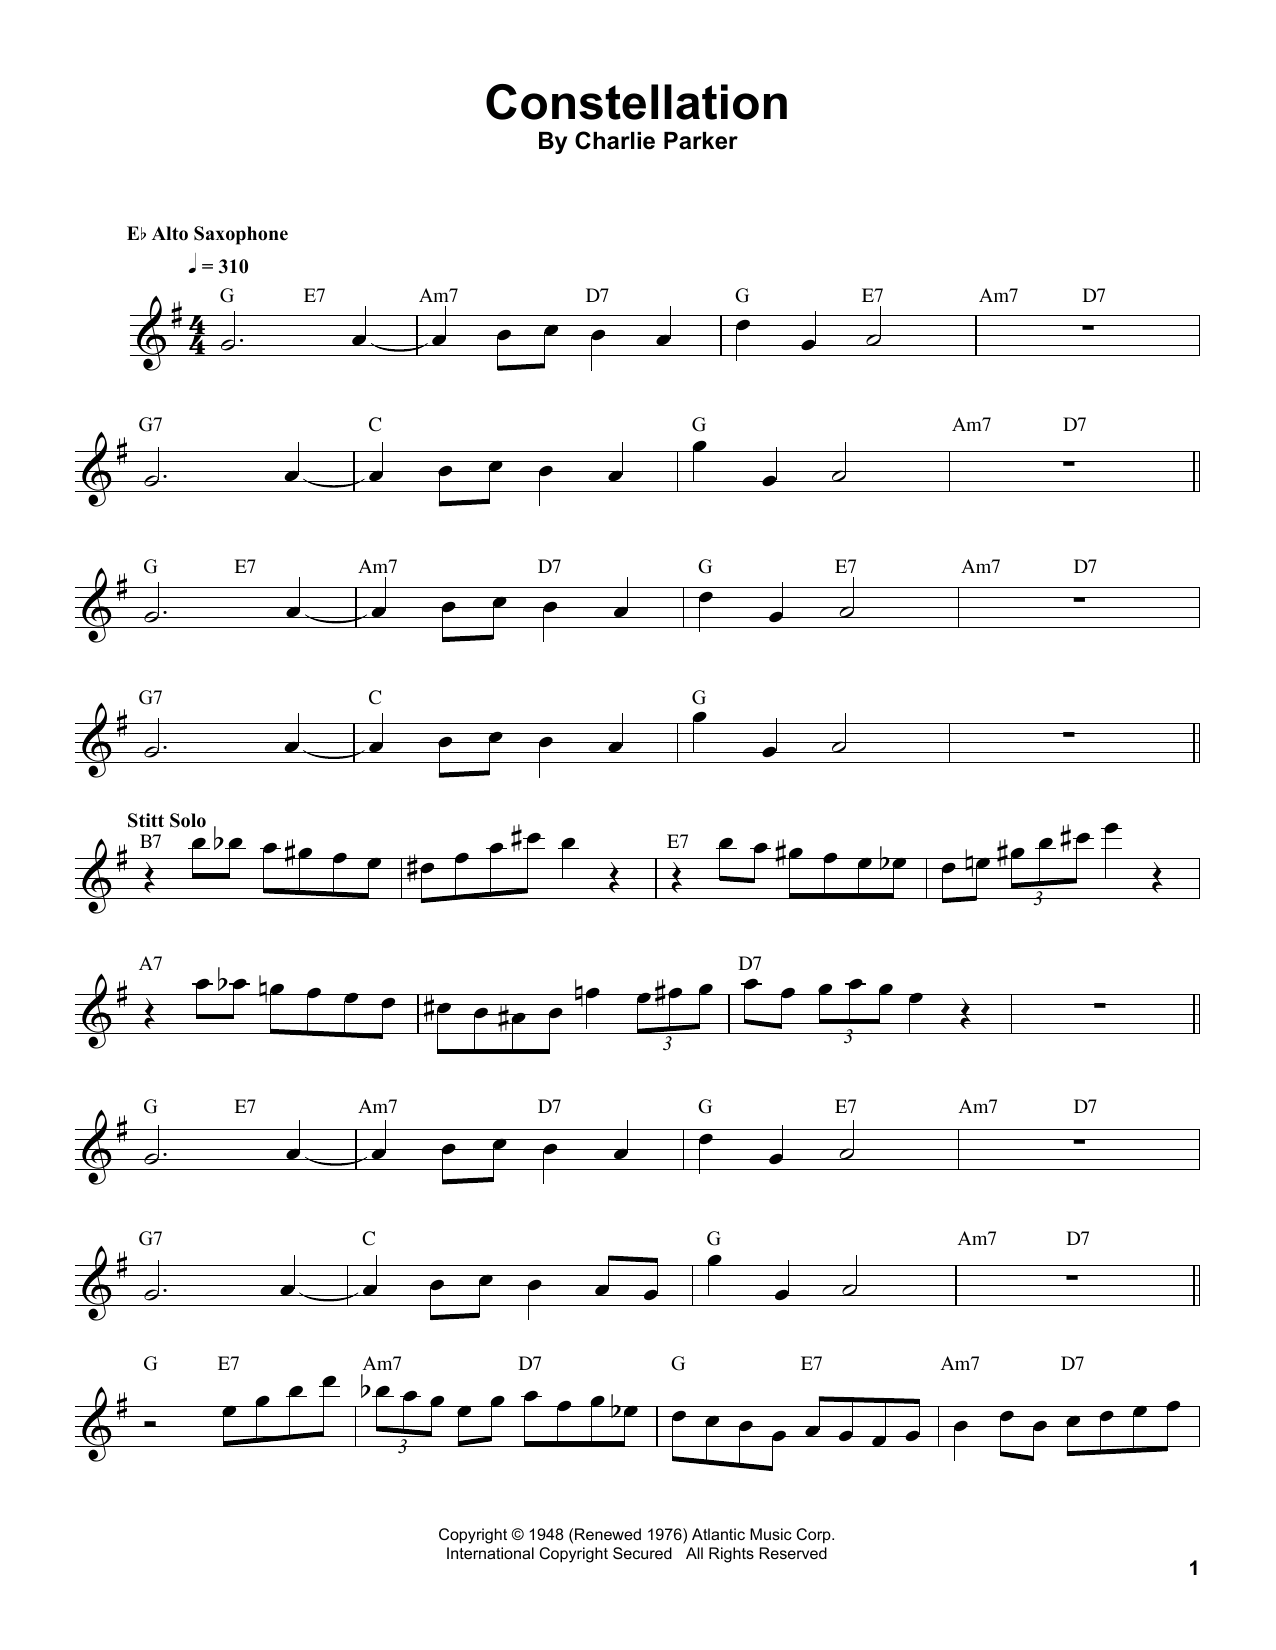 Sonny Stitt Constellation Sheet Music Notes & Chords for Tenor Sax Transcription - Download or Print PDF